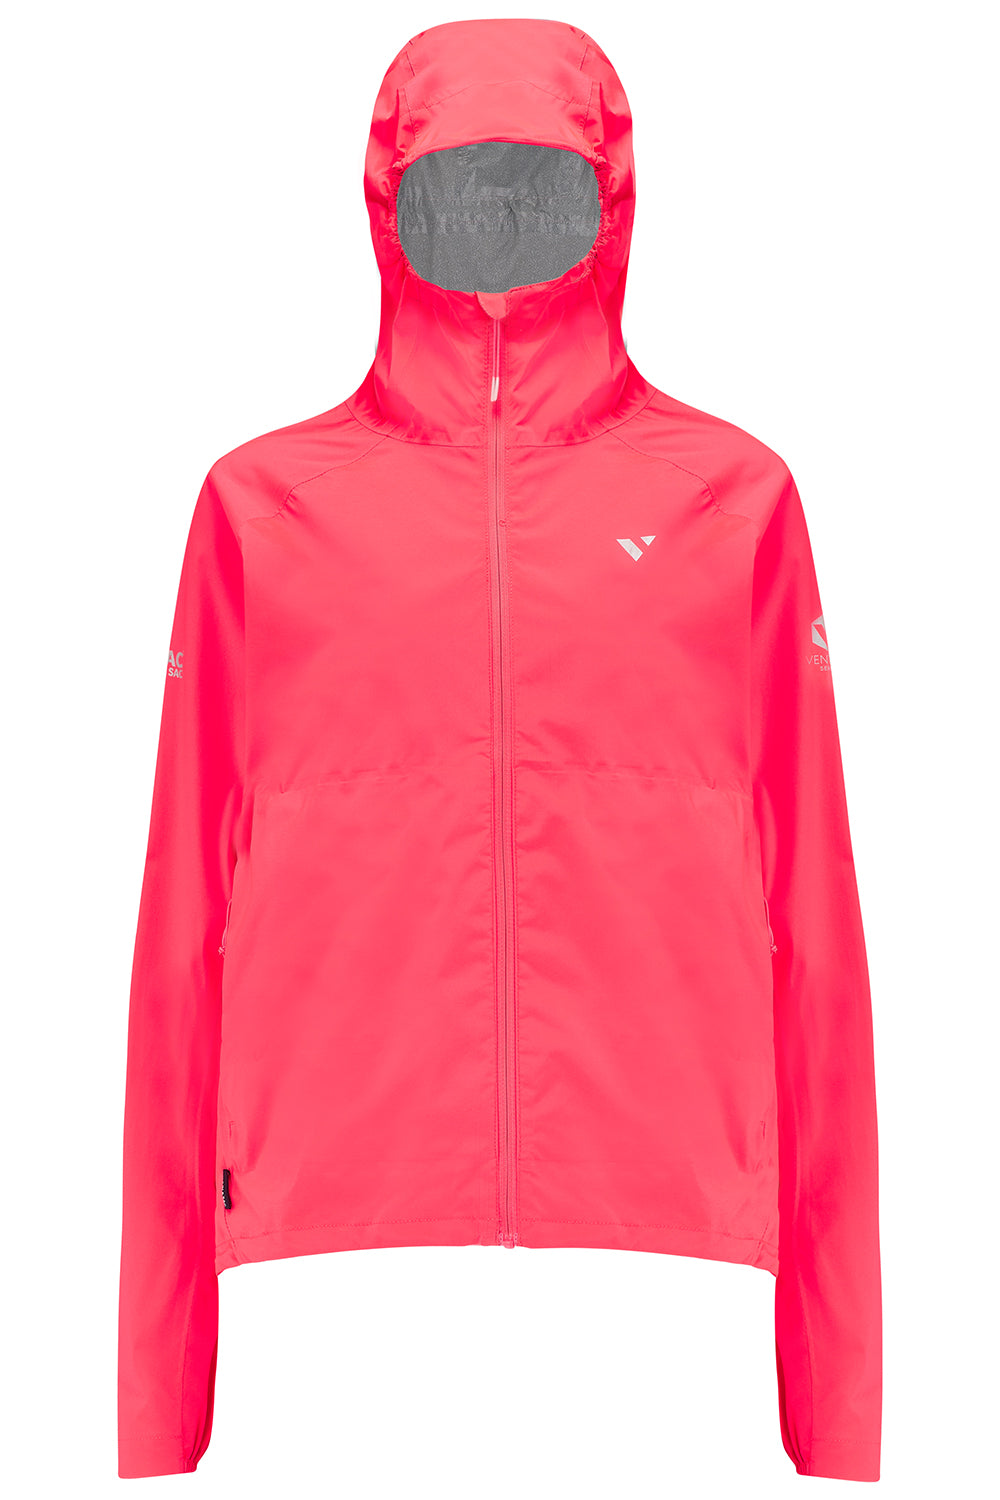 Ultralite -  Women's Running Jacket - Neon Watermelon